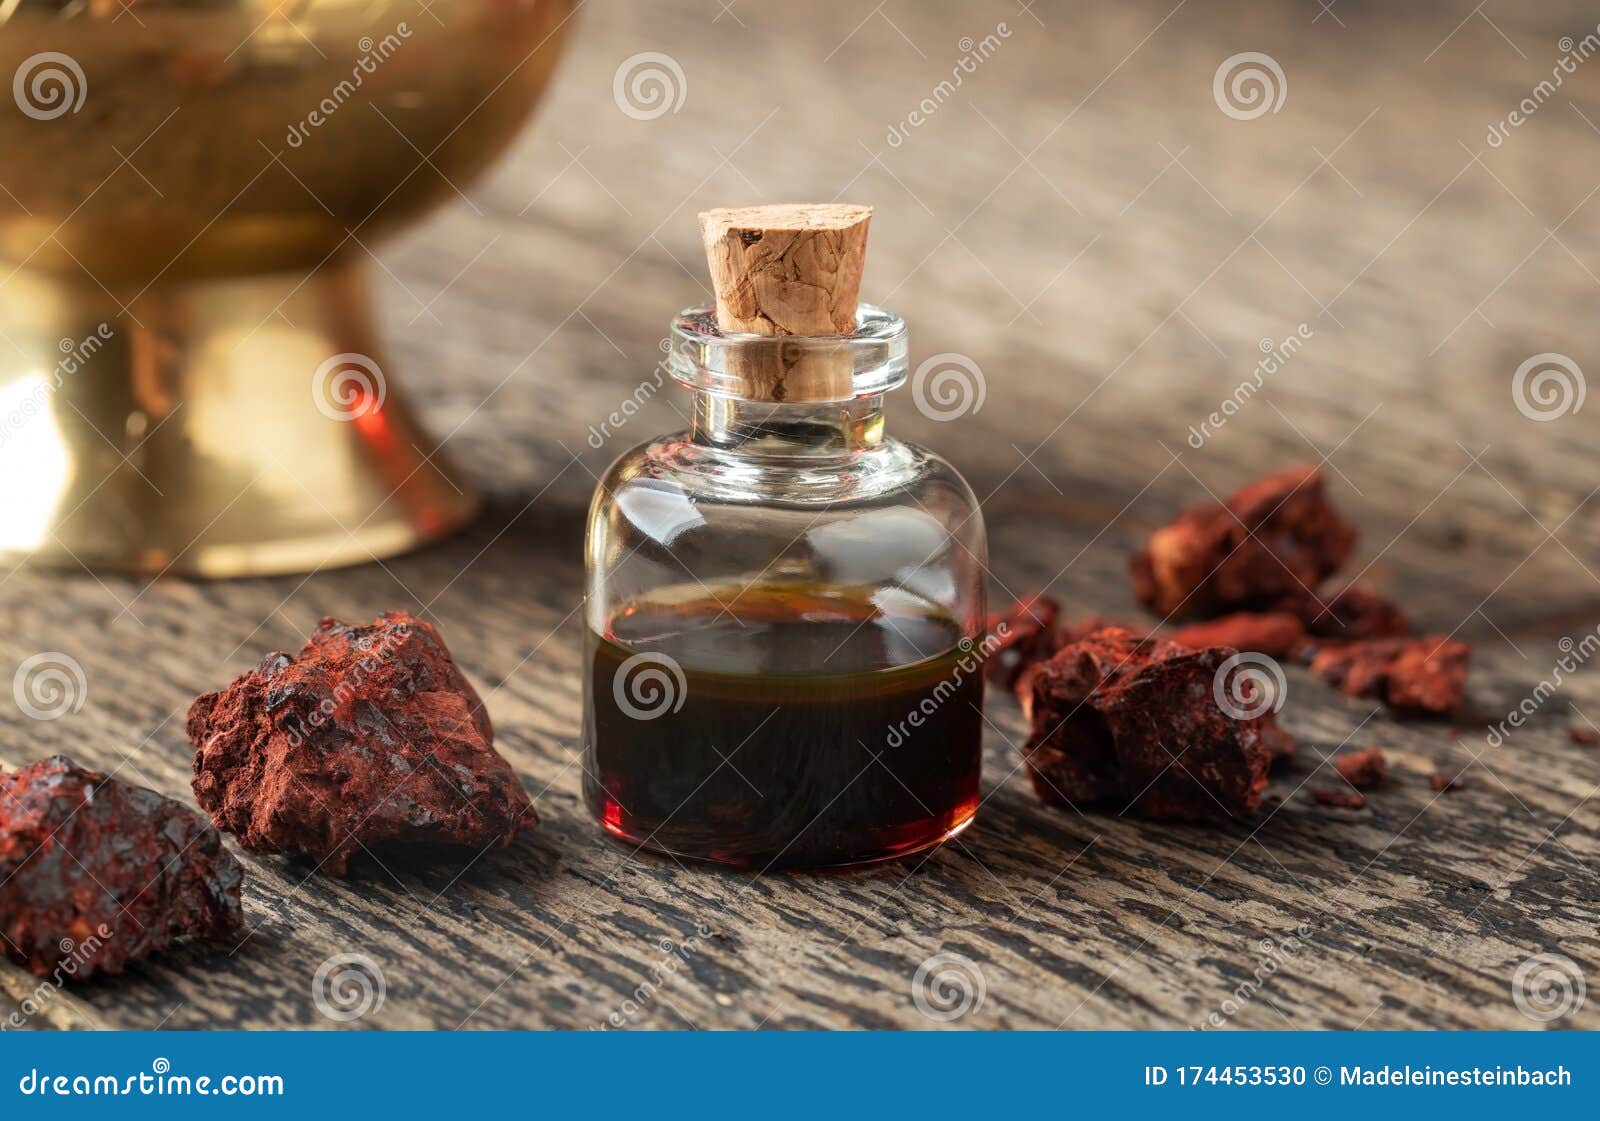 a bottle of sangre de drago oil and resin